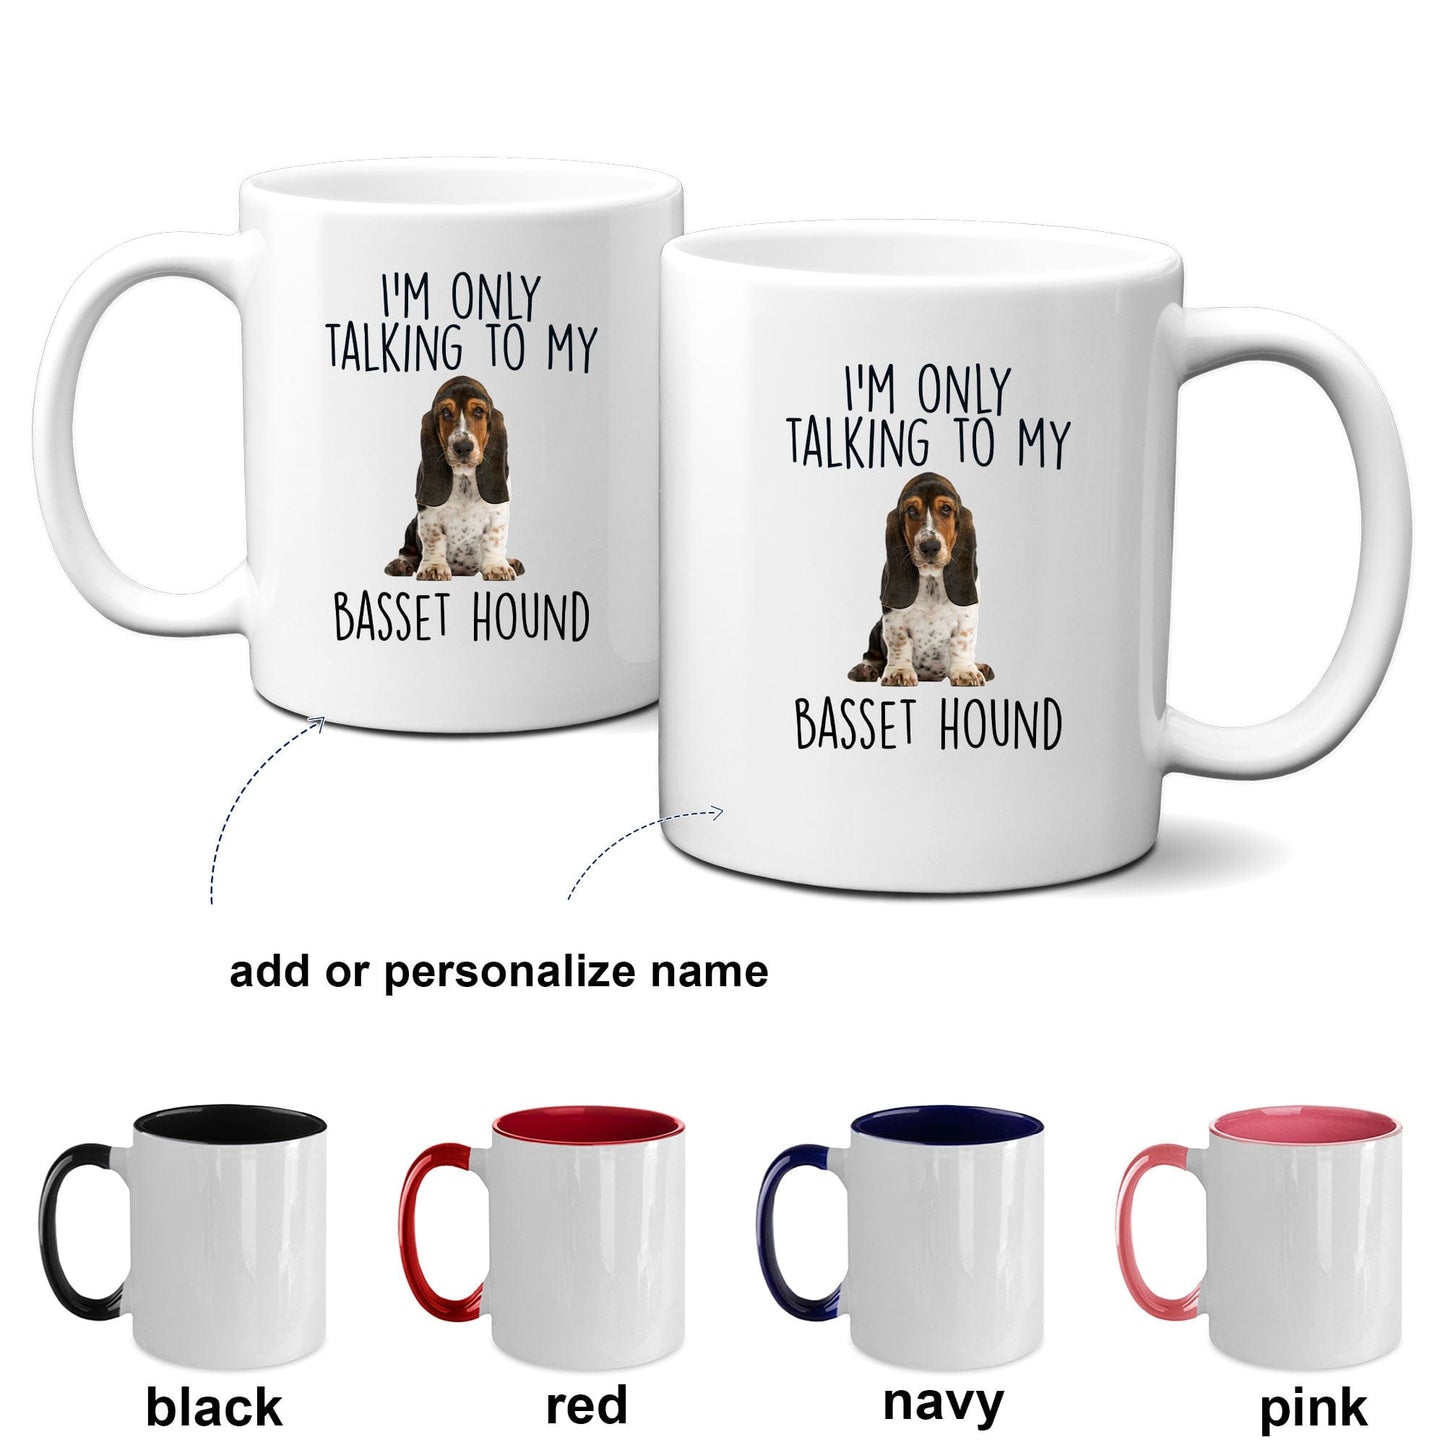 I'm Only Talking to My Basset Hound Dog Custom Ceramic Coffee Mug